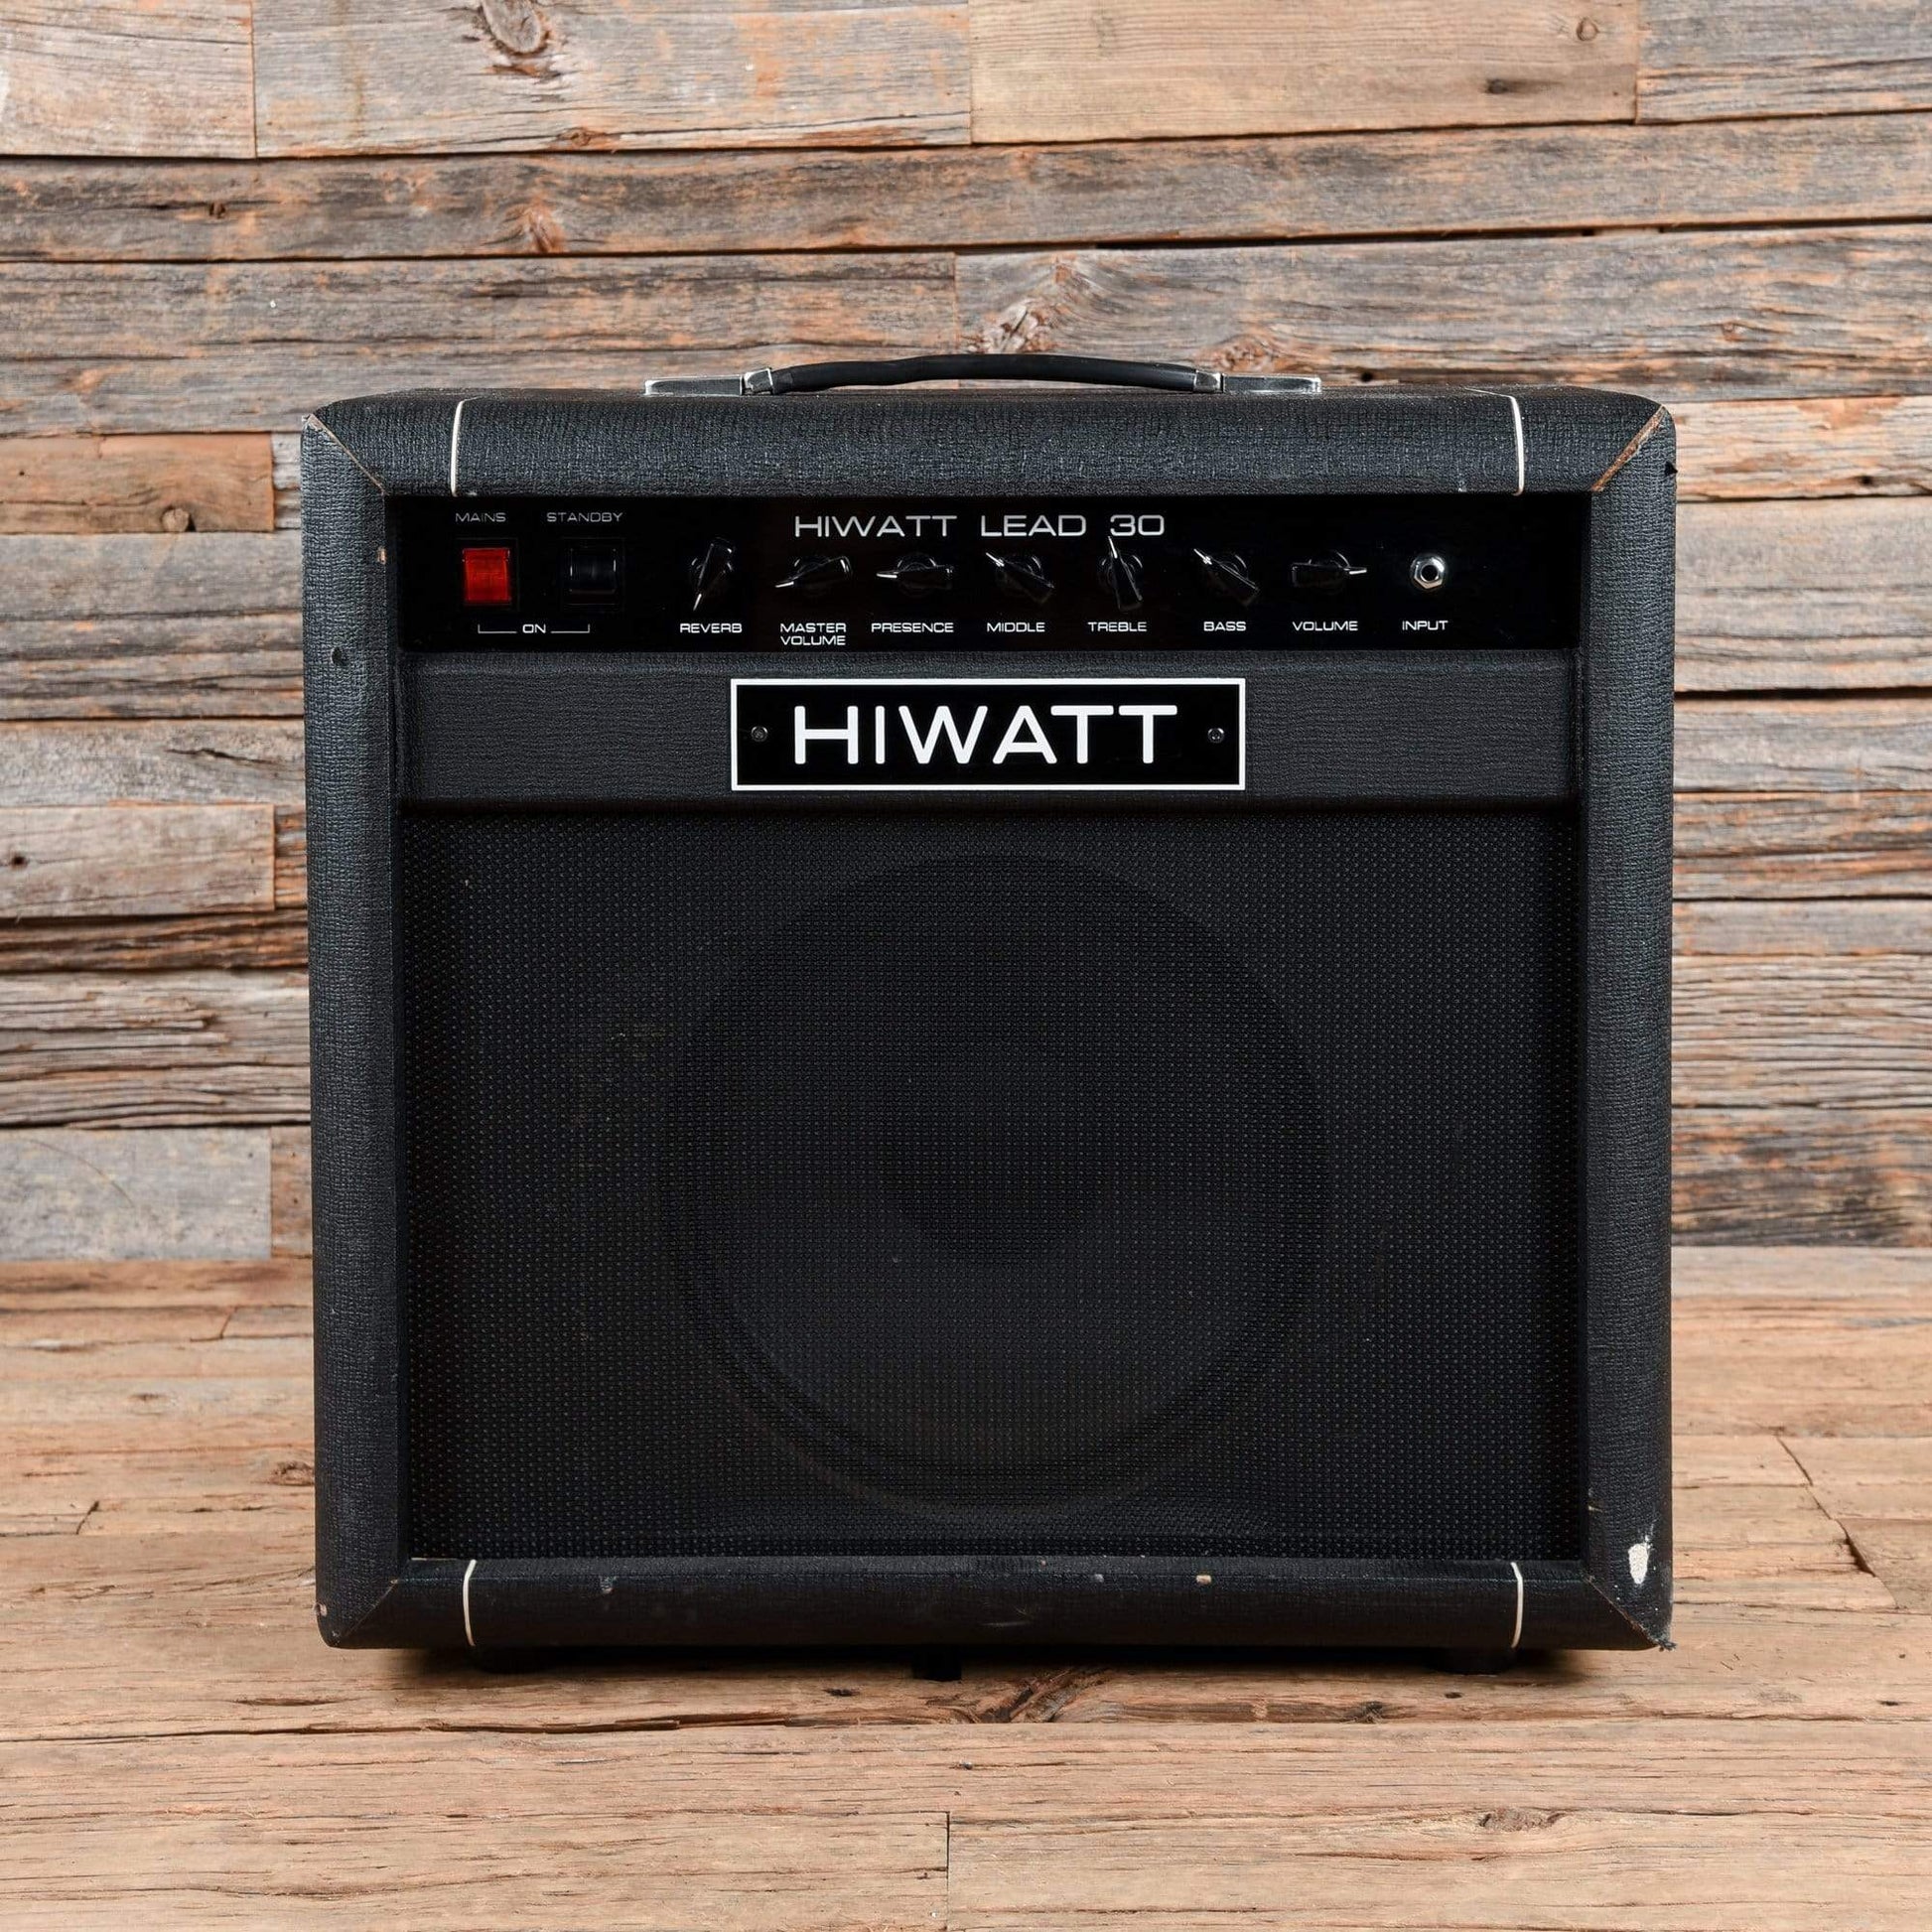 Hiwatt Lead 30 Combo Amps / Guitar Combos